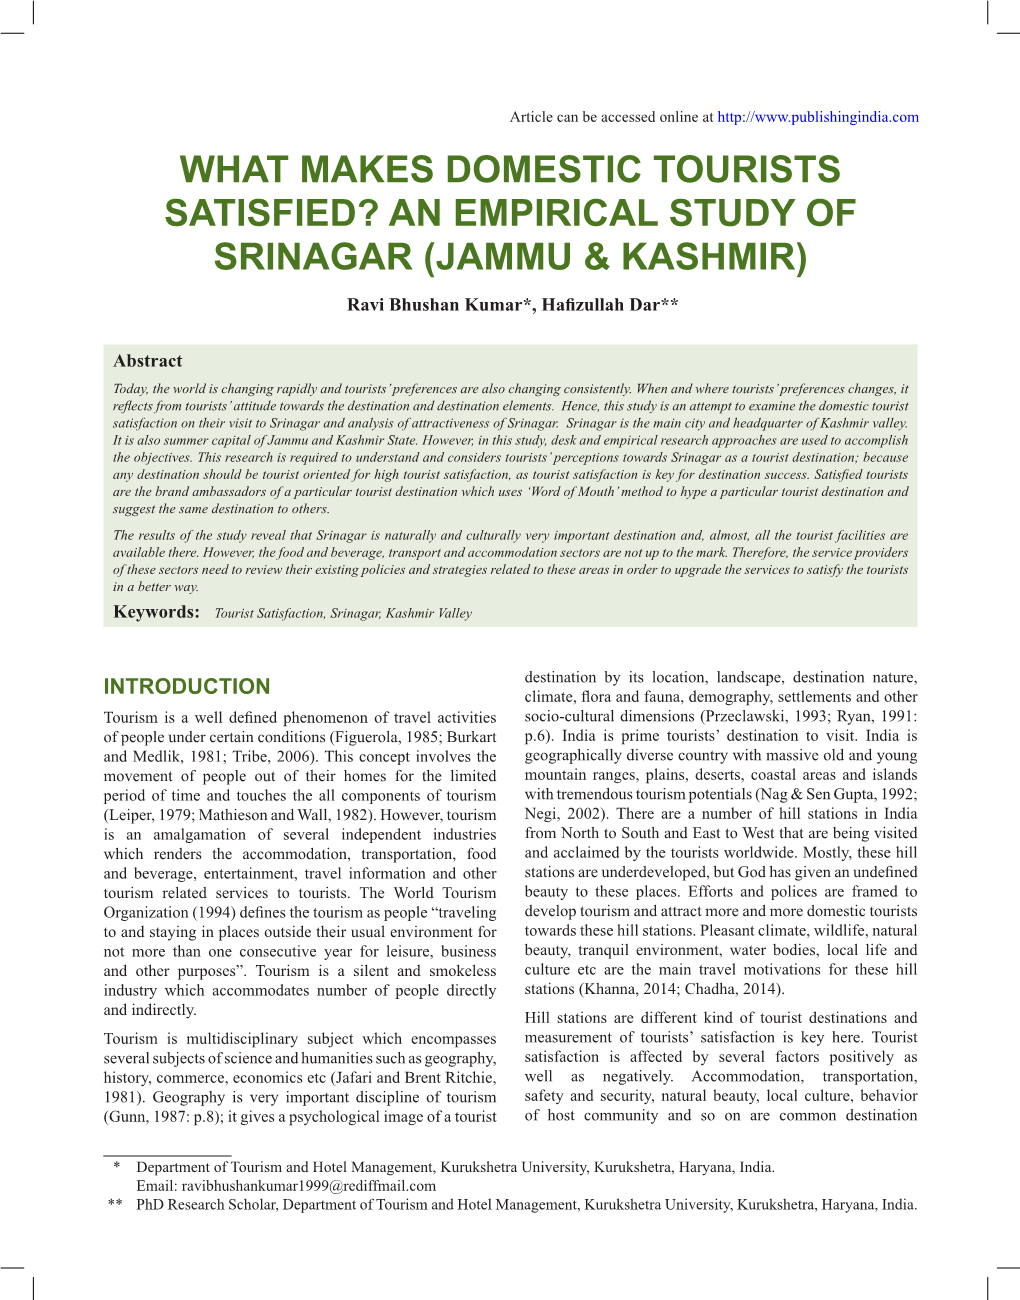 What Makes Domestic Tourists Satisfied? an Empirical Study of Srinagar (Jammu & Kashmir)